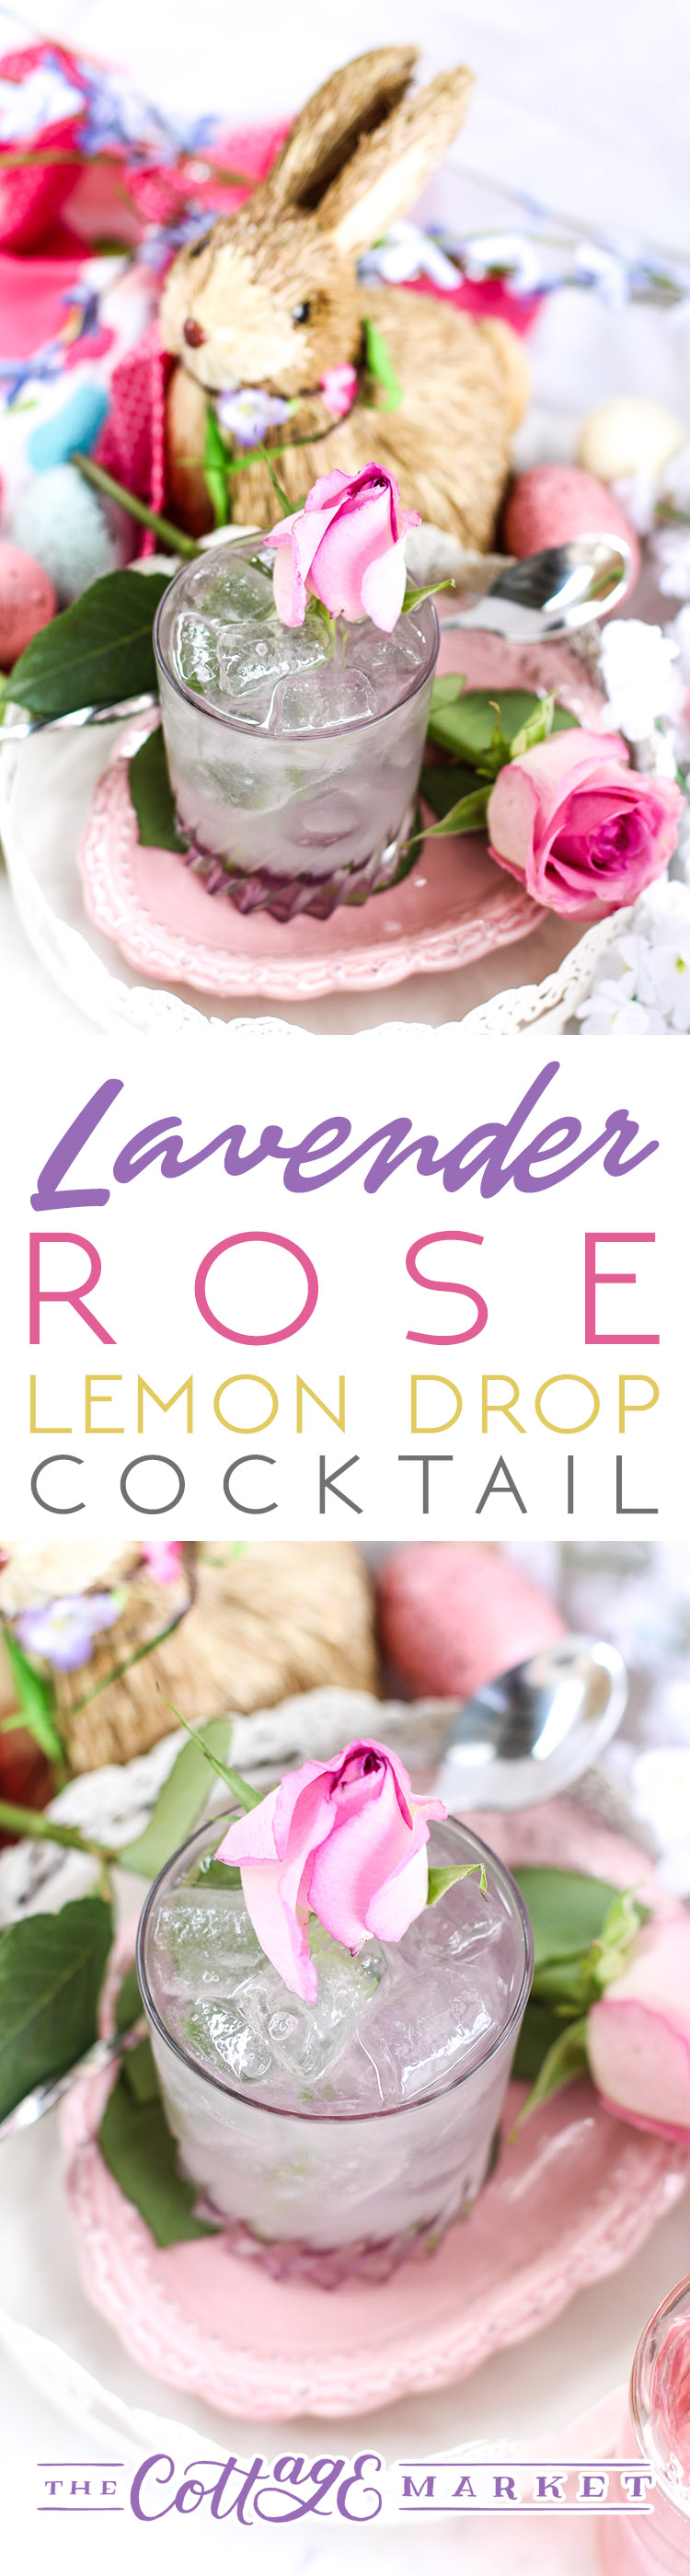 http://thecottagemarket.com/wp-content/uploads/2017/03/Lavender-Rose-Lemon-Drop-Cocktail-Tower-1.jpg